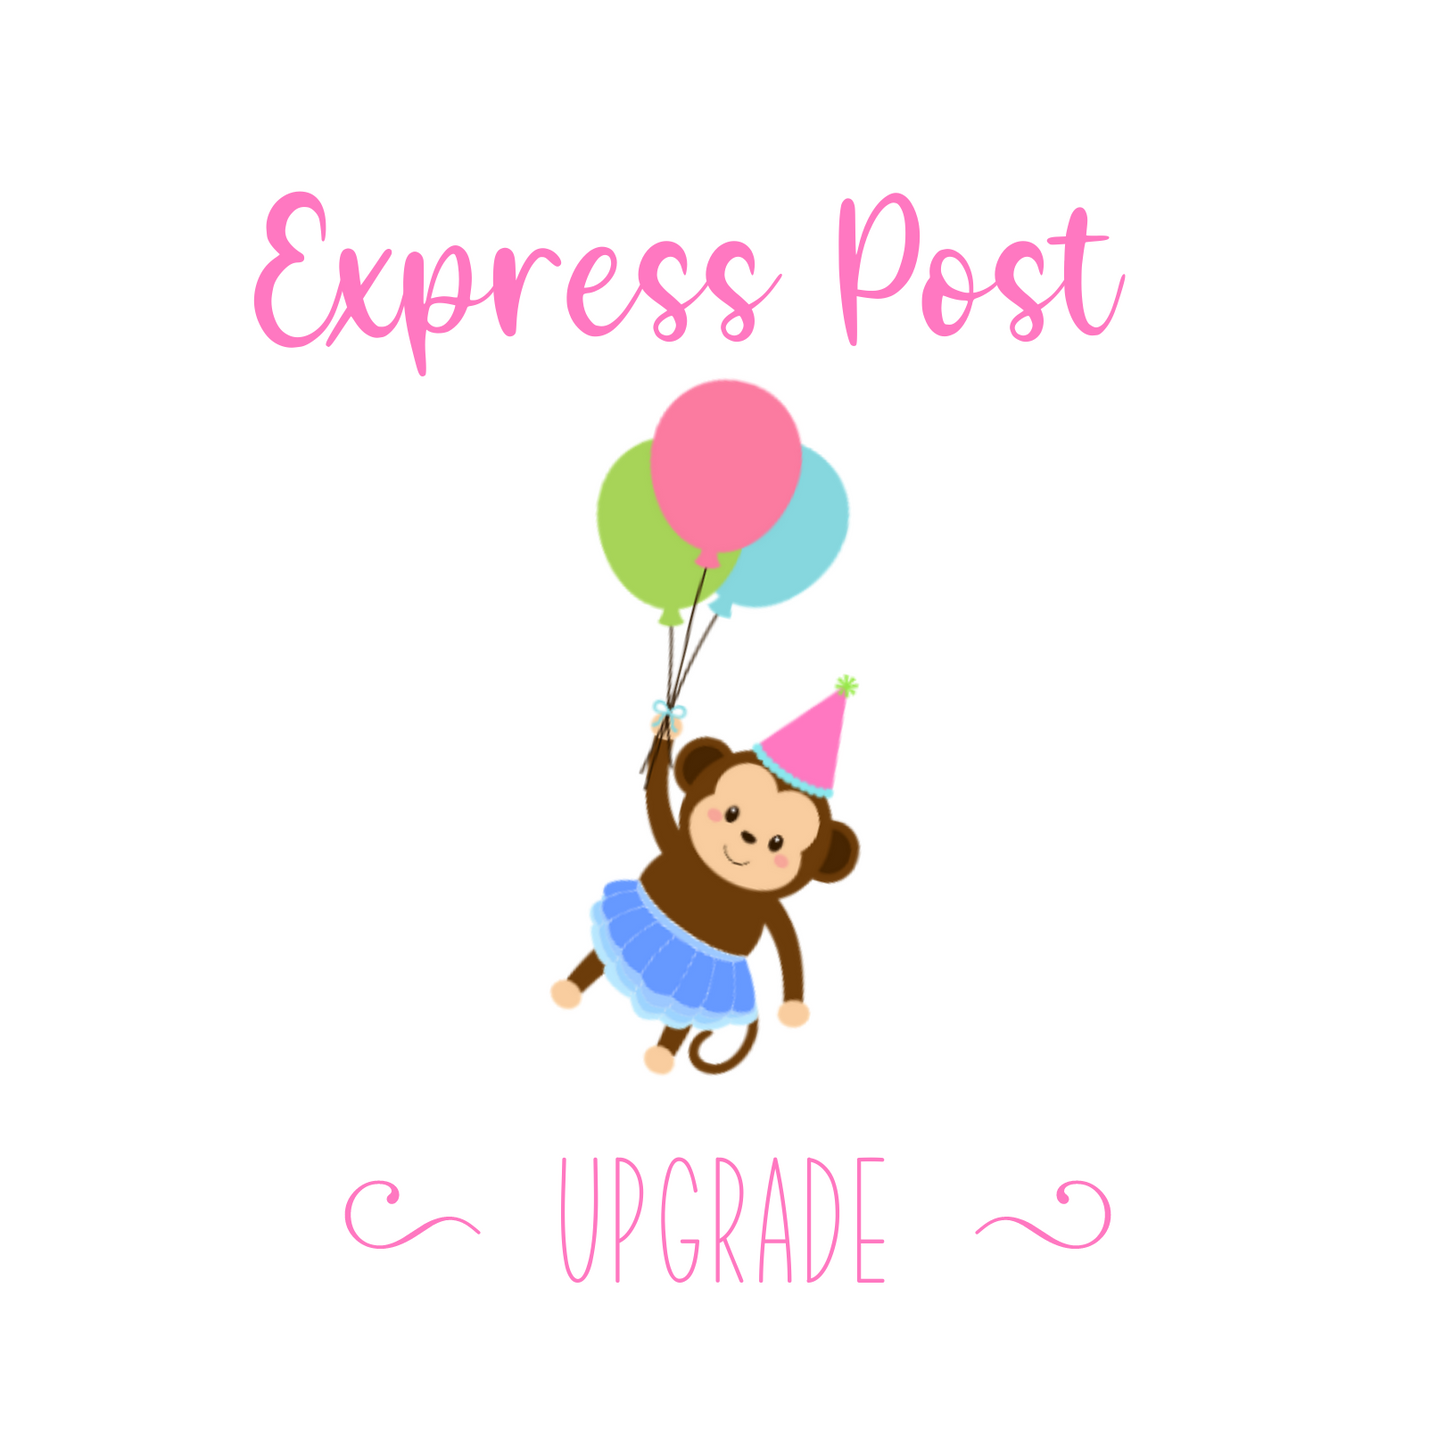 Express Post upgrade